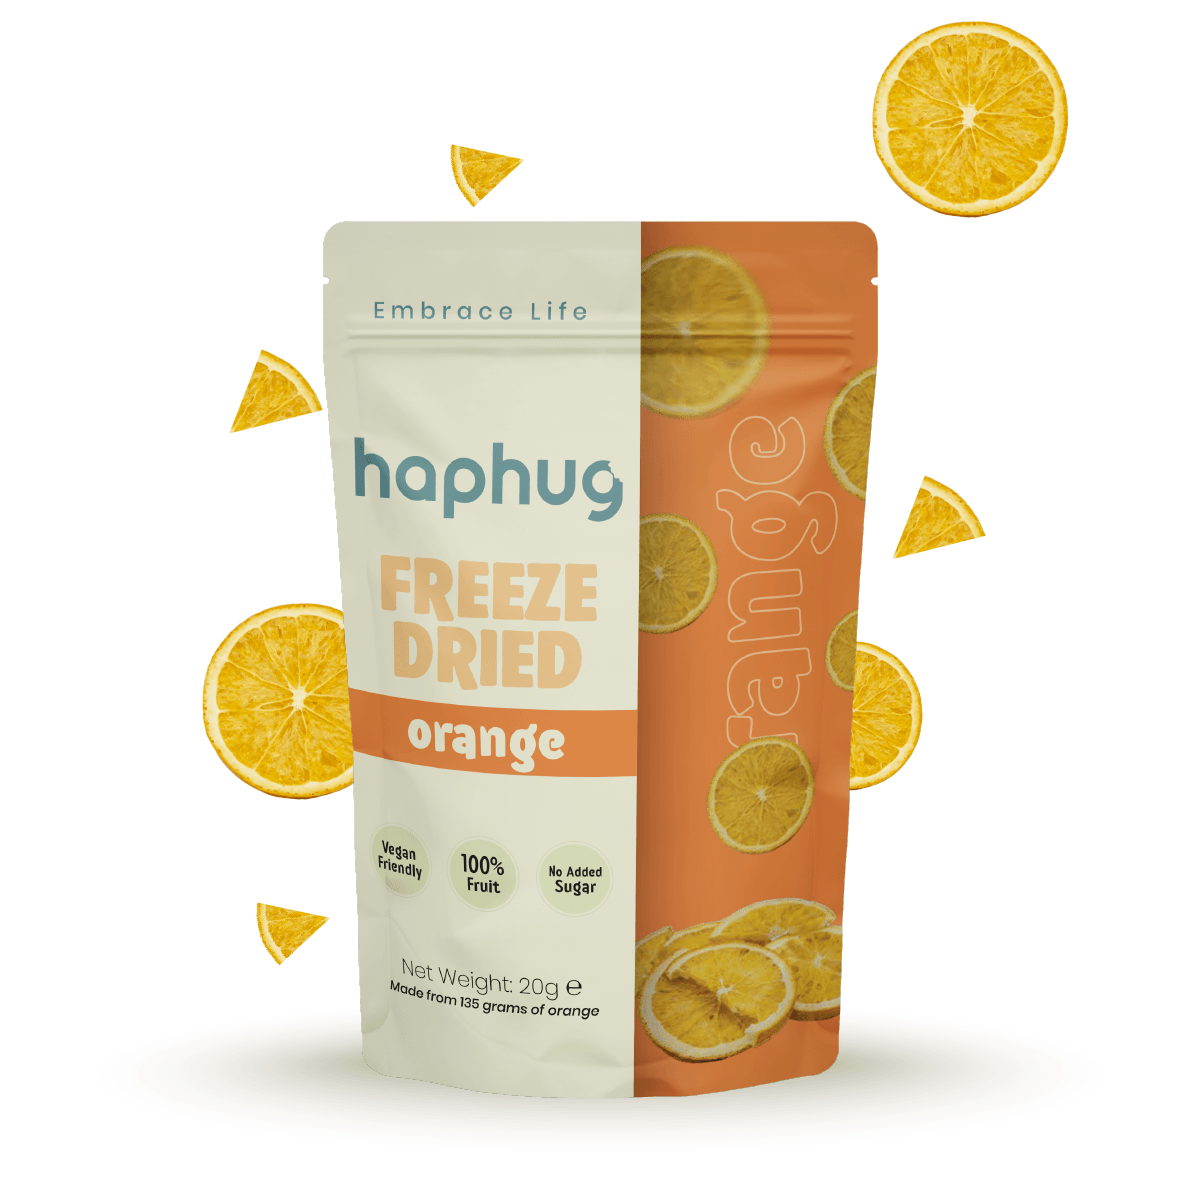 HapHug Freeze-Dried Orange - 20g